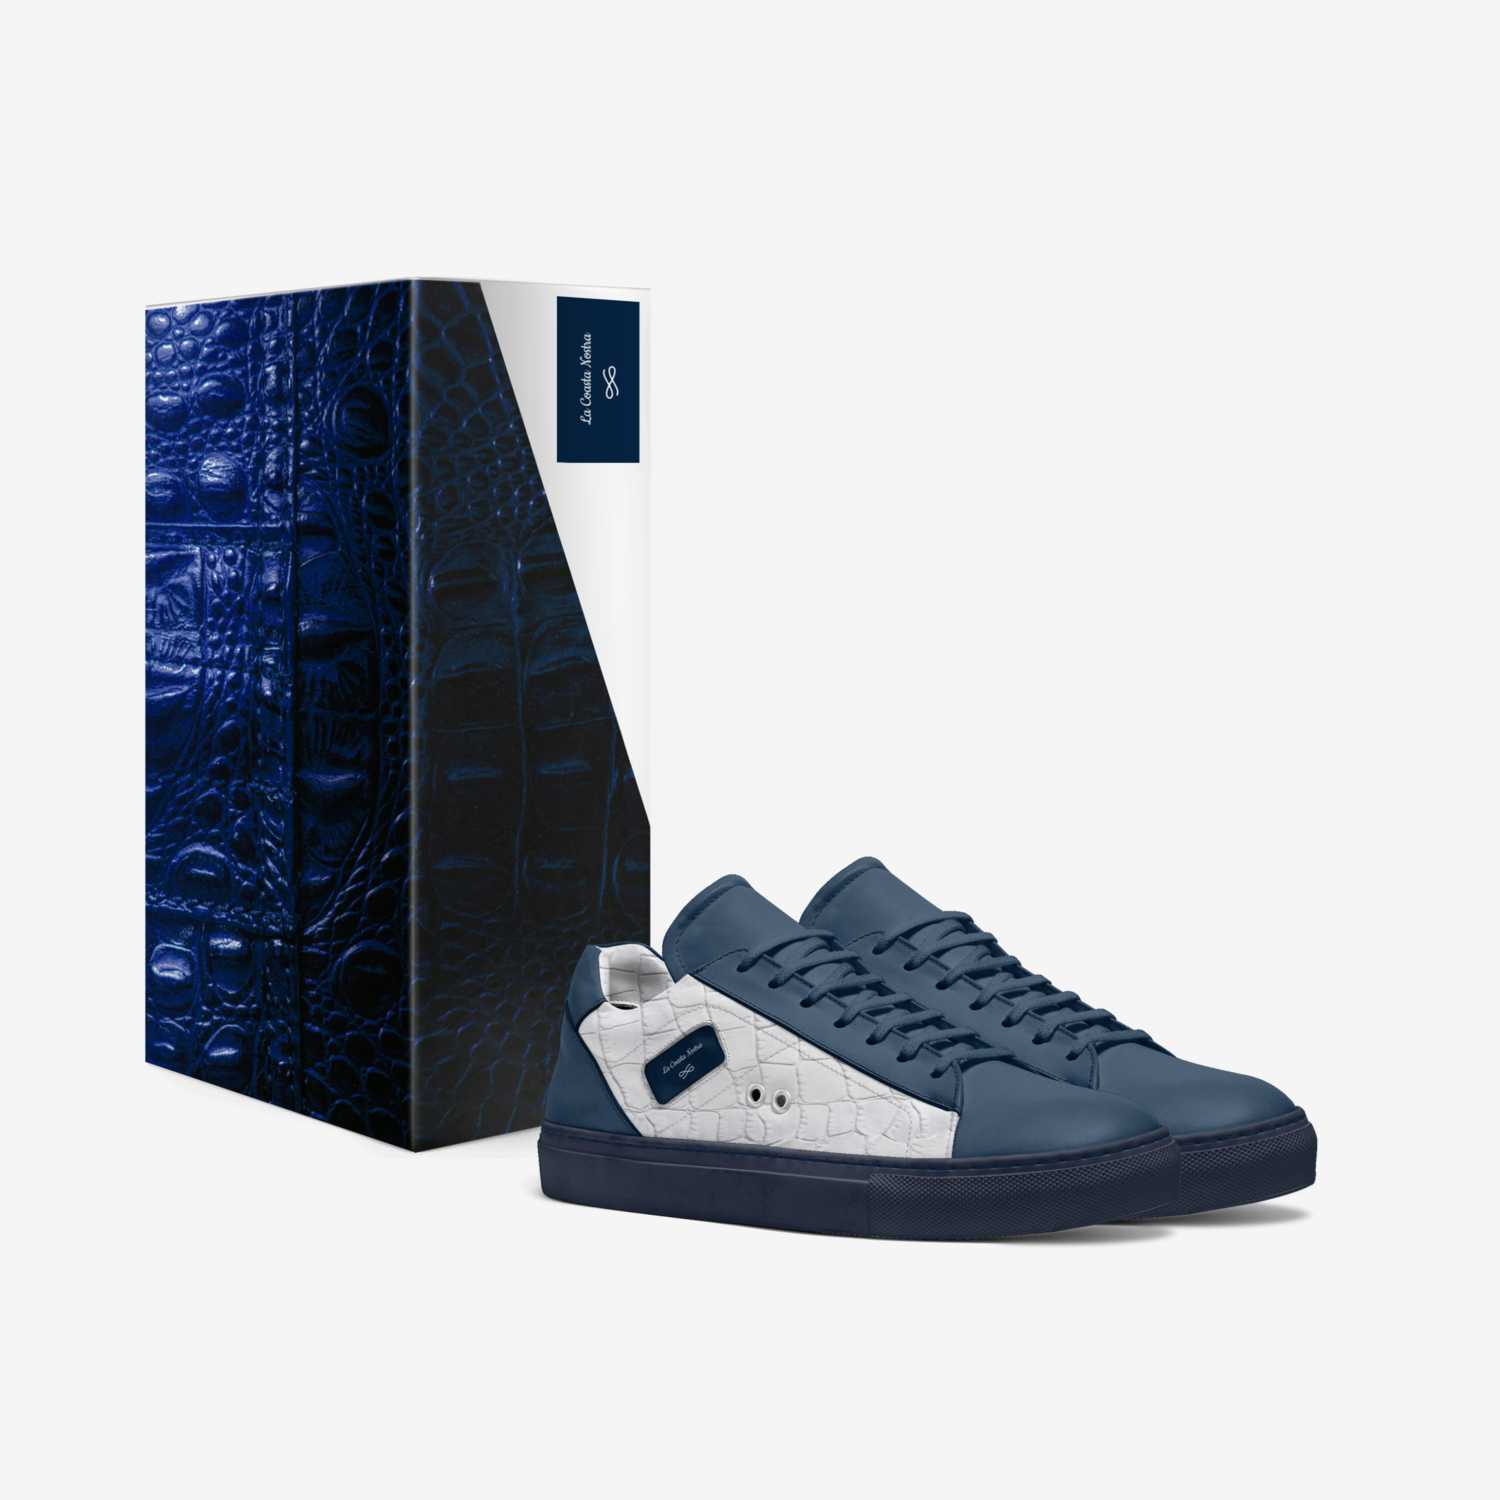 La Coasta Nostra custom made in Italy shoes by Clinzell Washington Iii | Box view